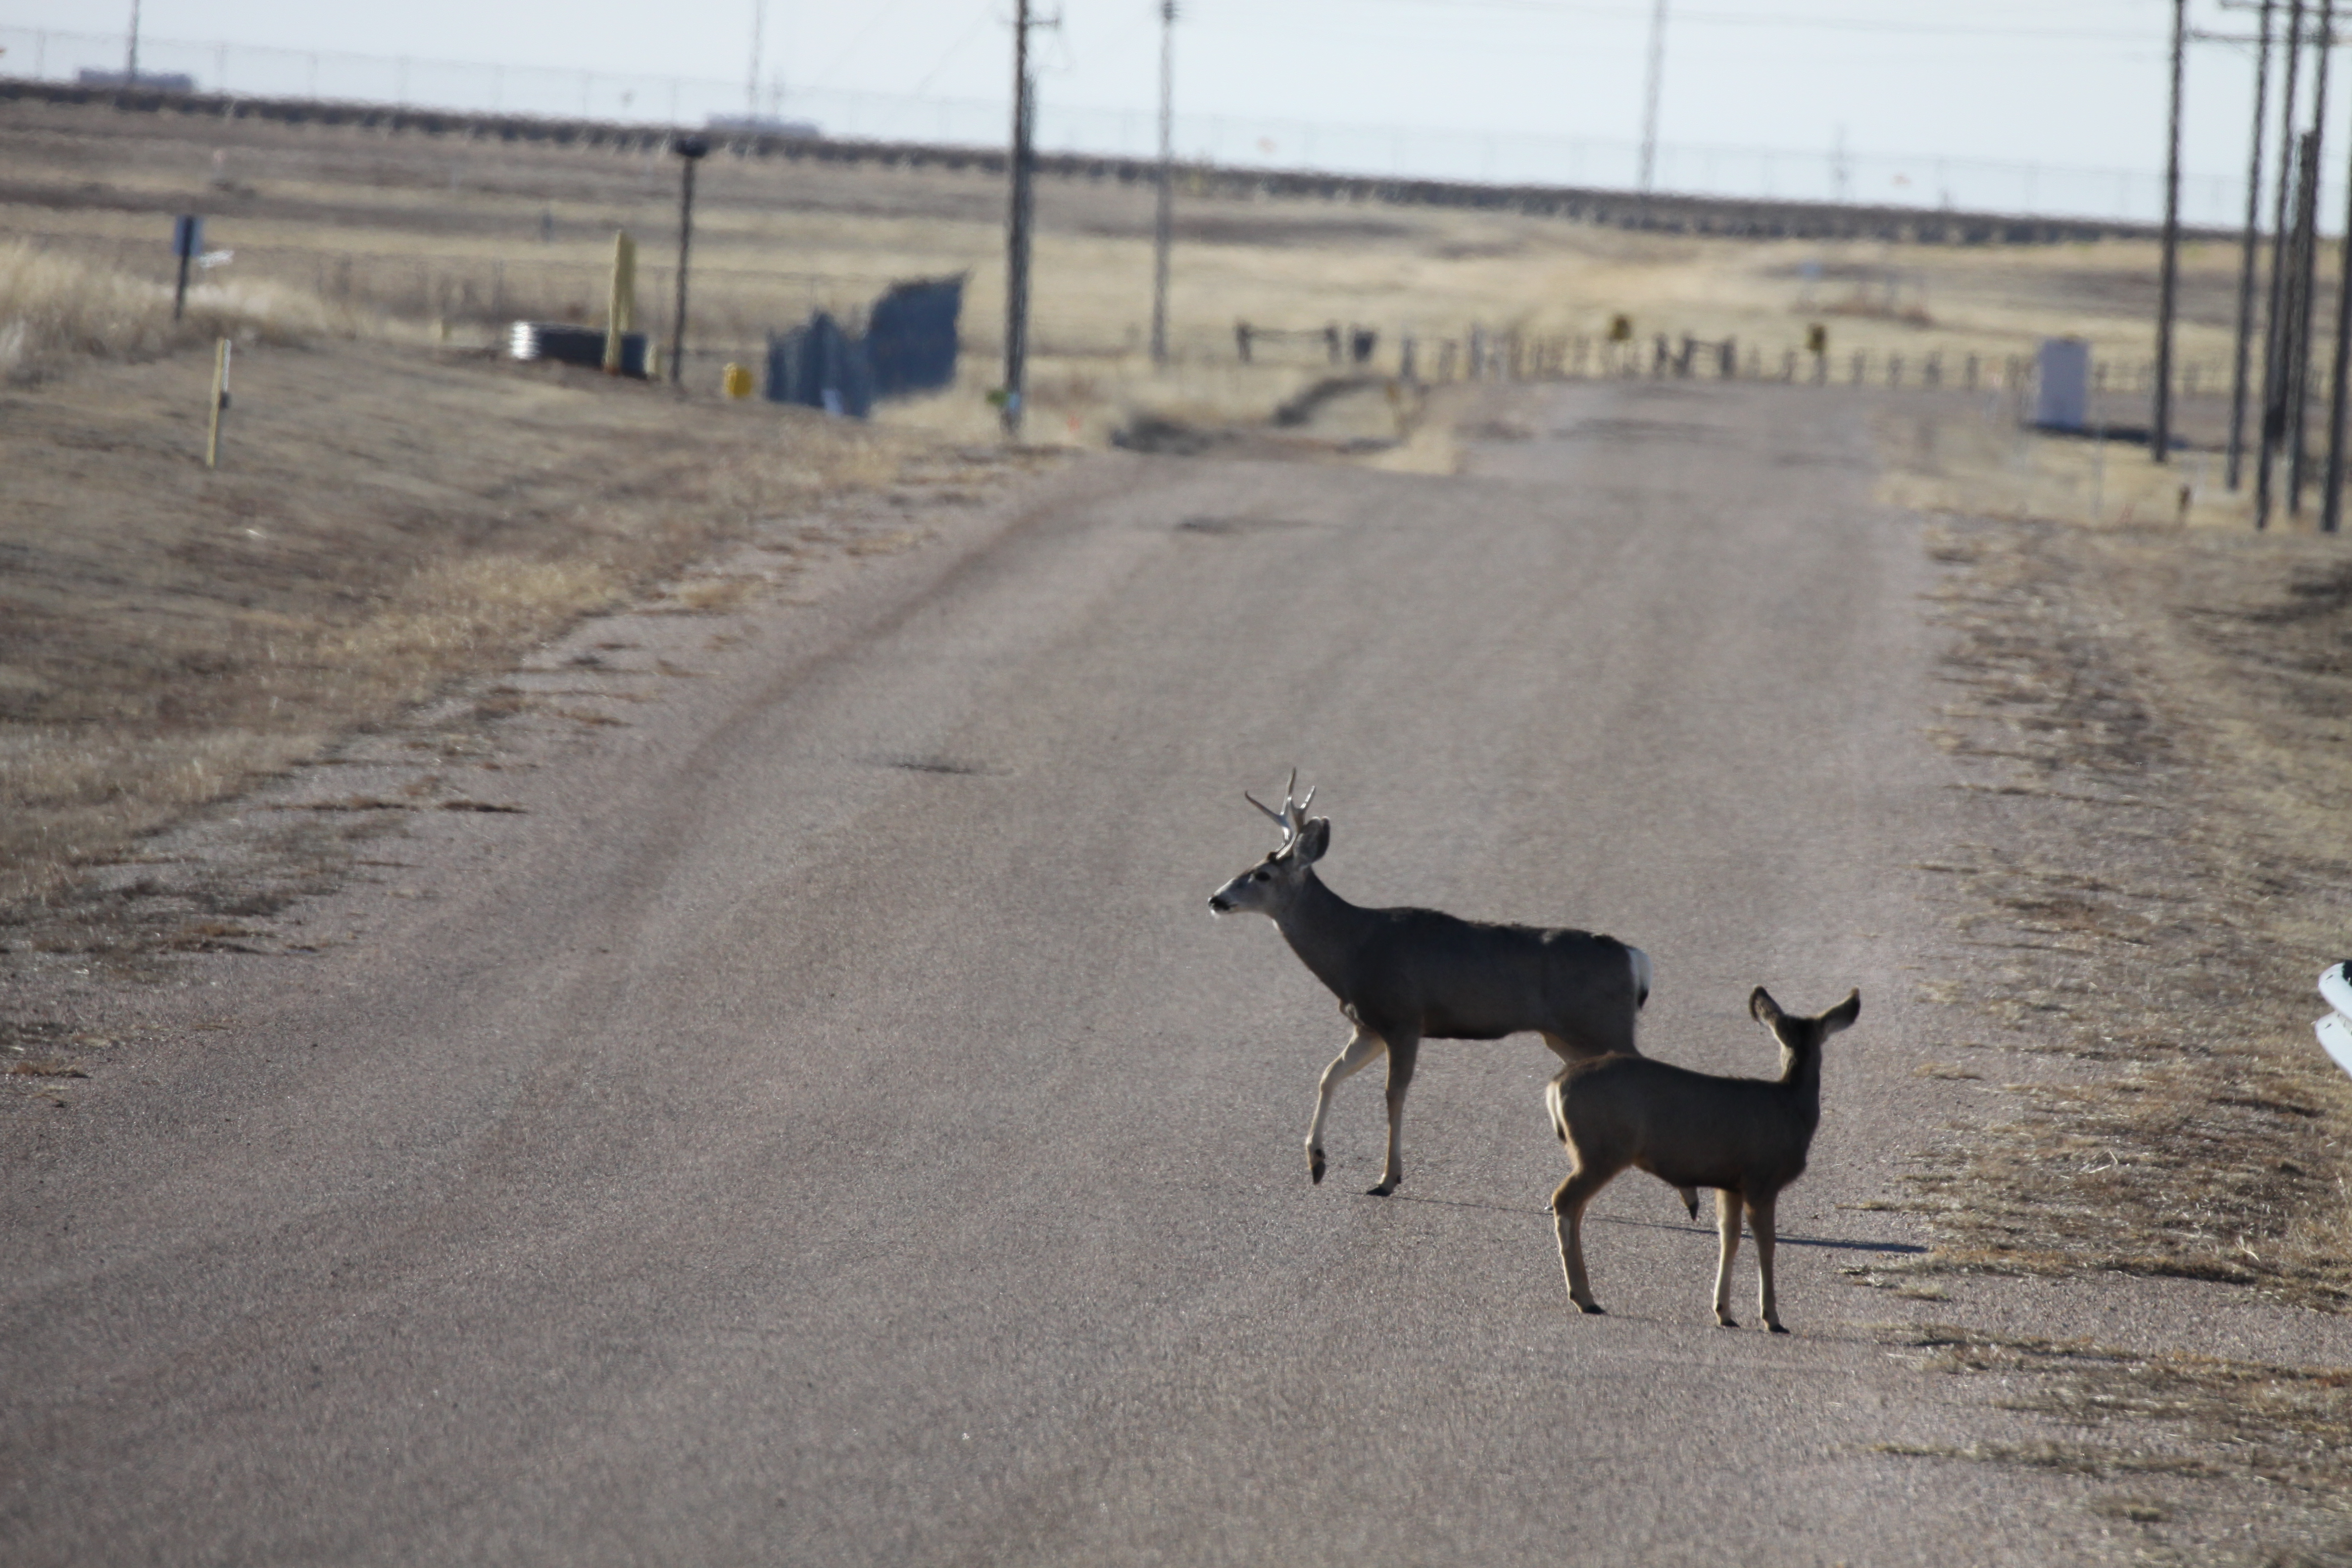 A pair of mule deer cross a Pantex road that divides grazing areas.